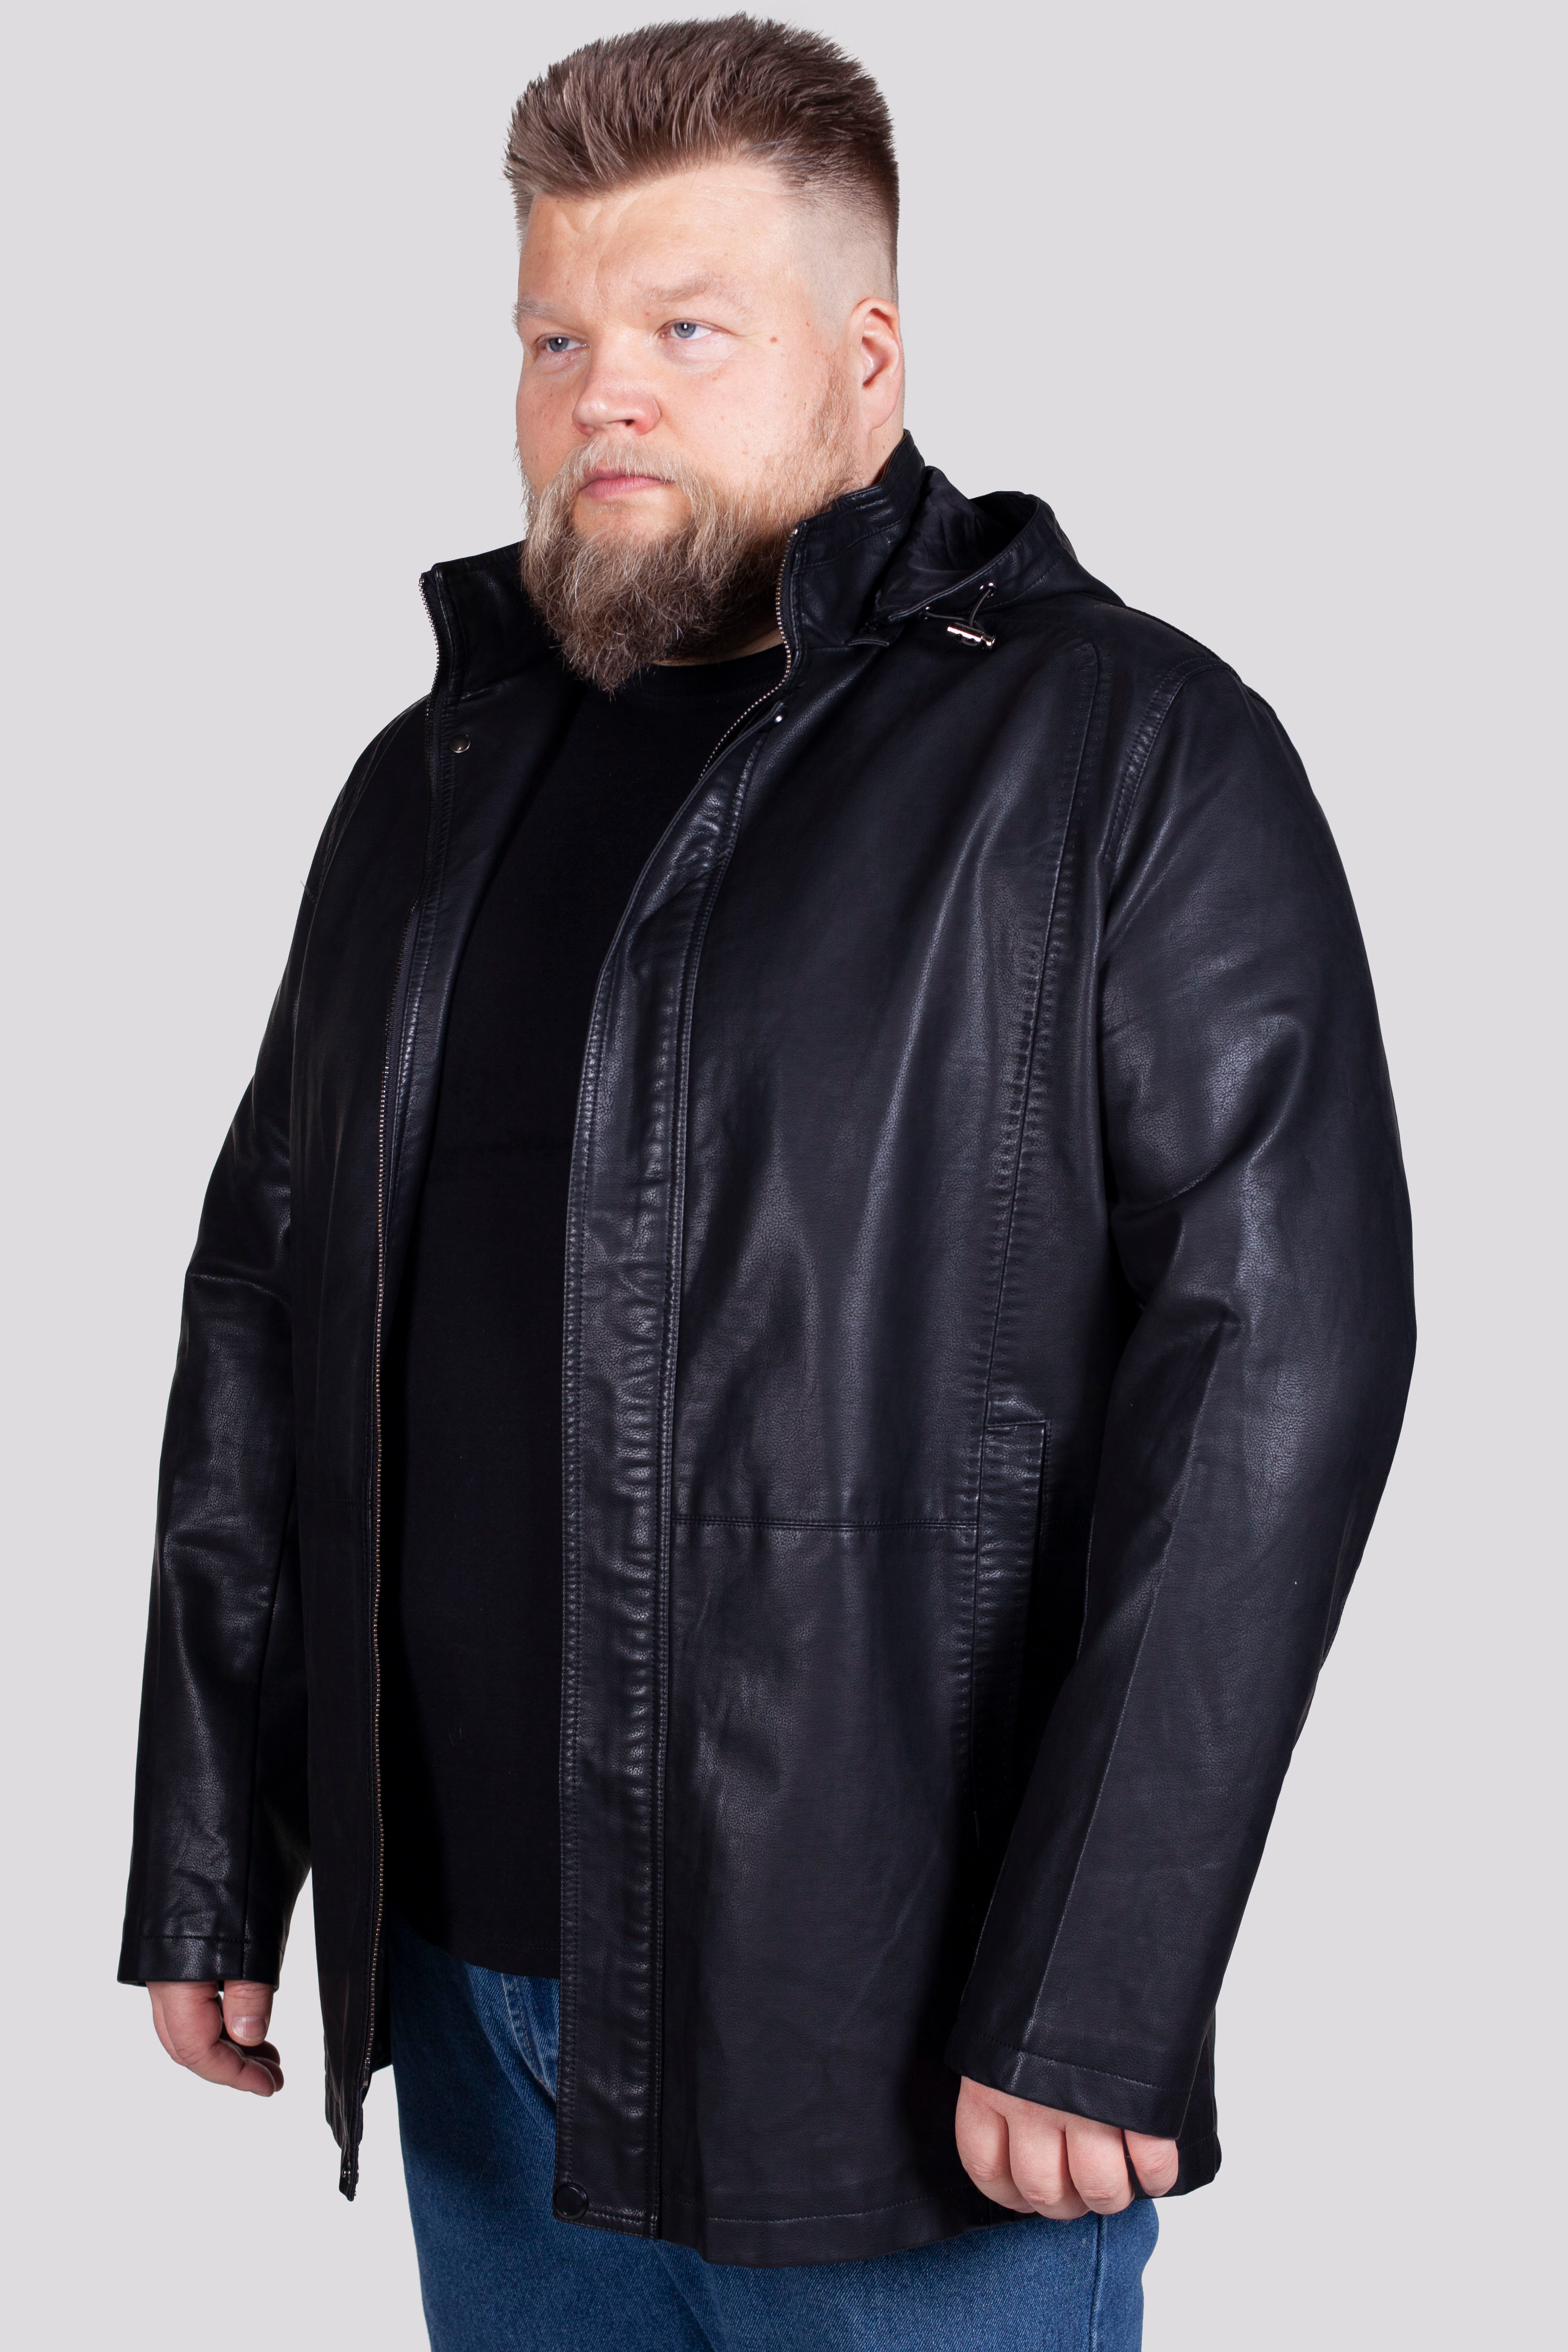 Кожаная куртка мужская ORO 1613 черная 68 RU